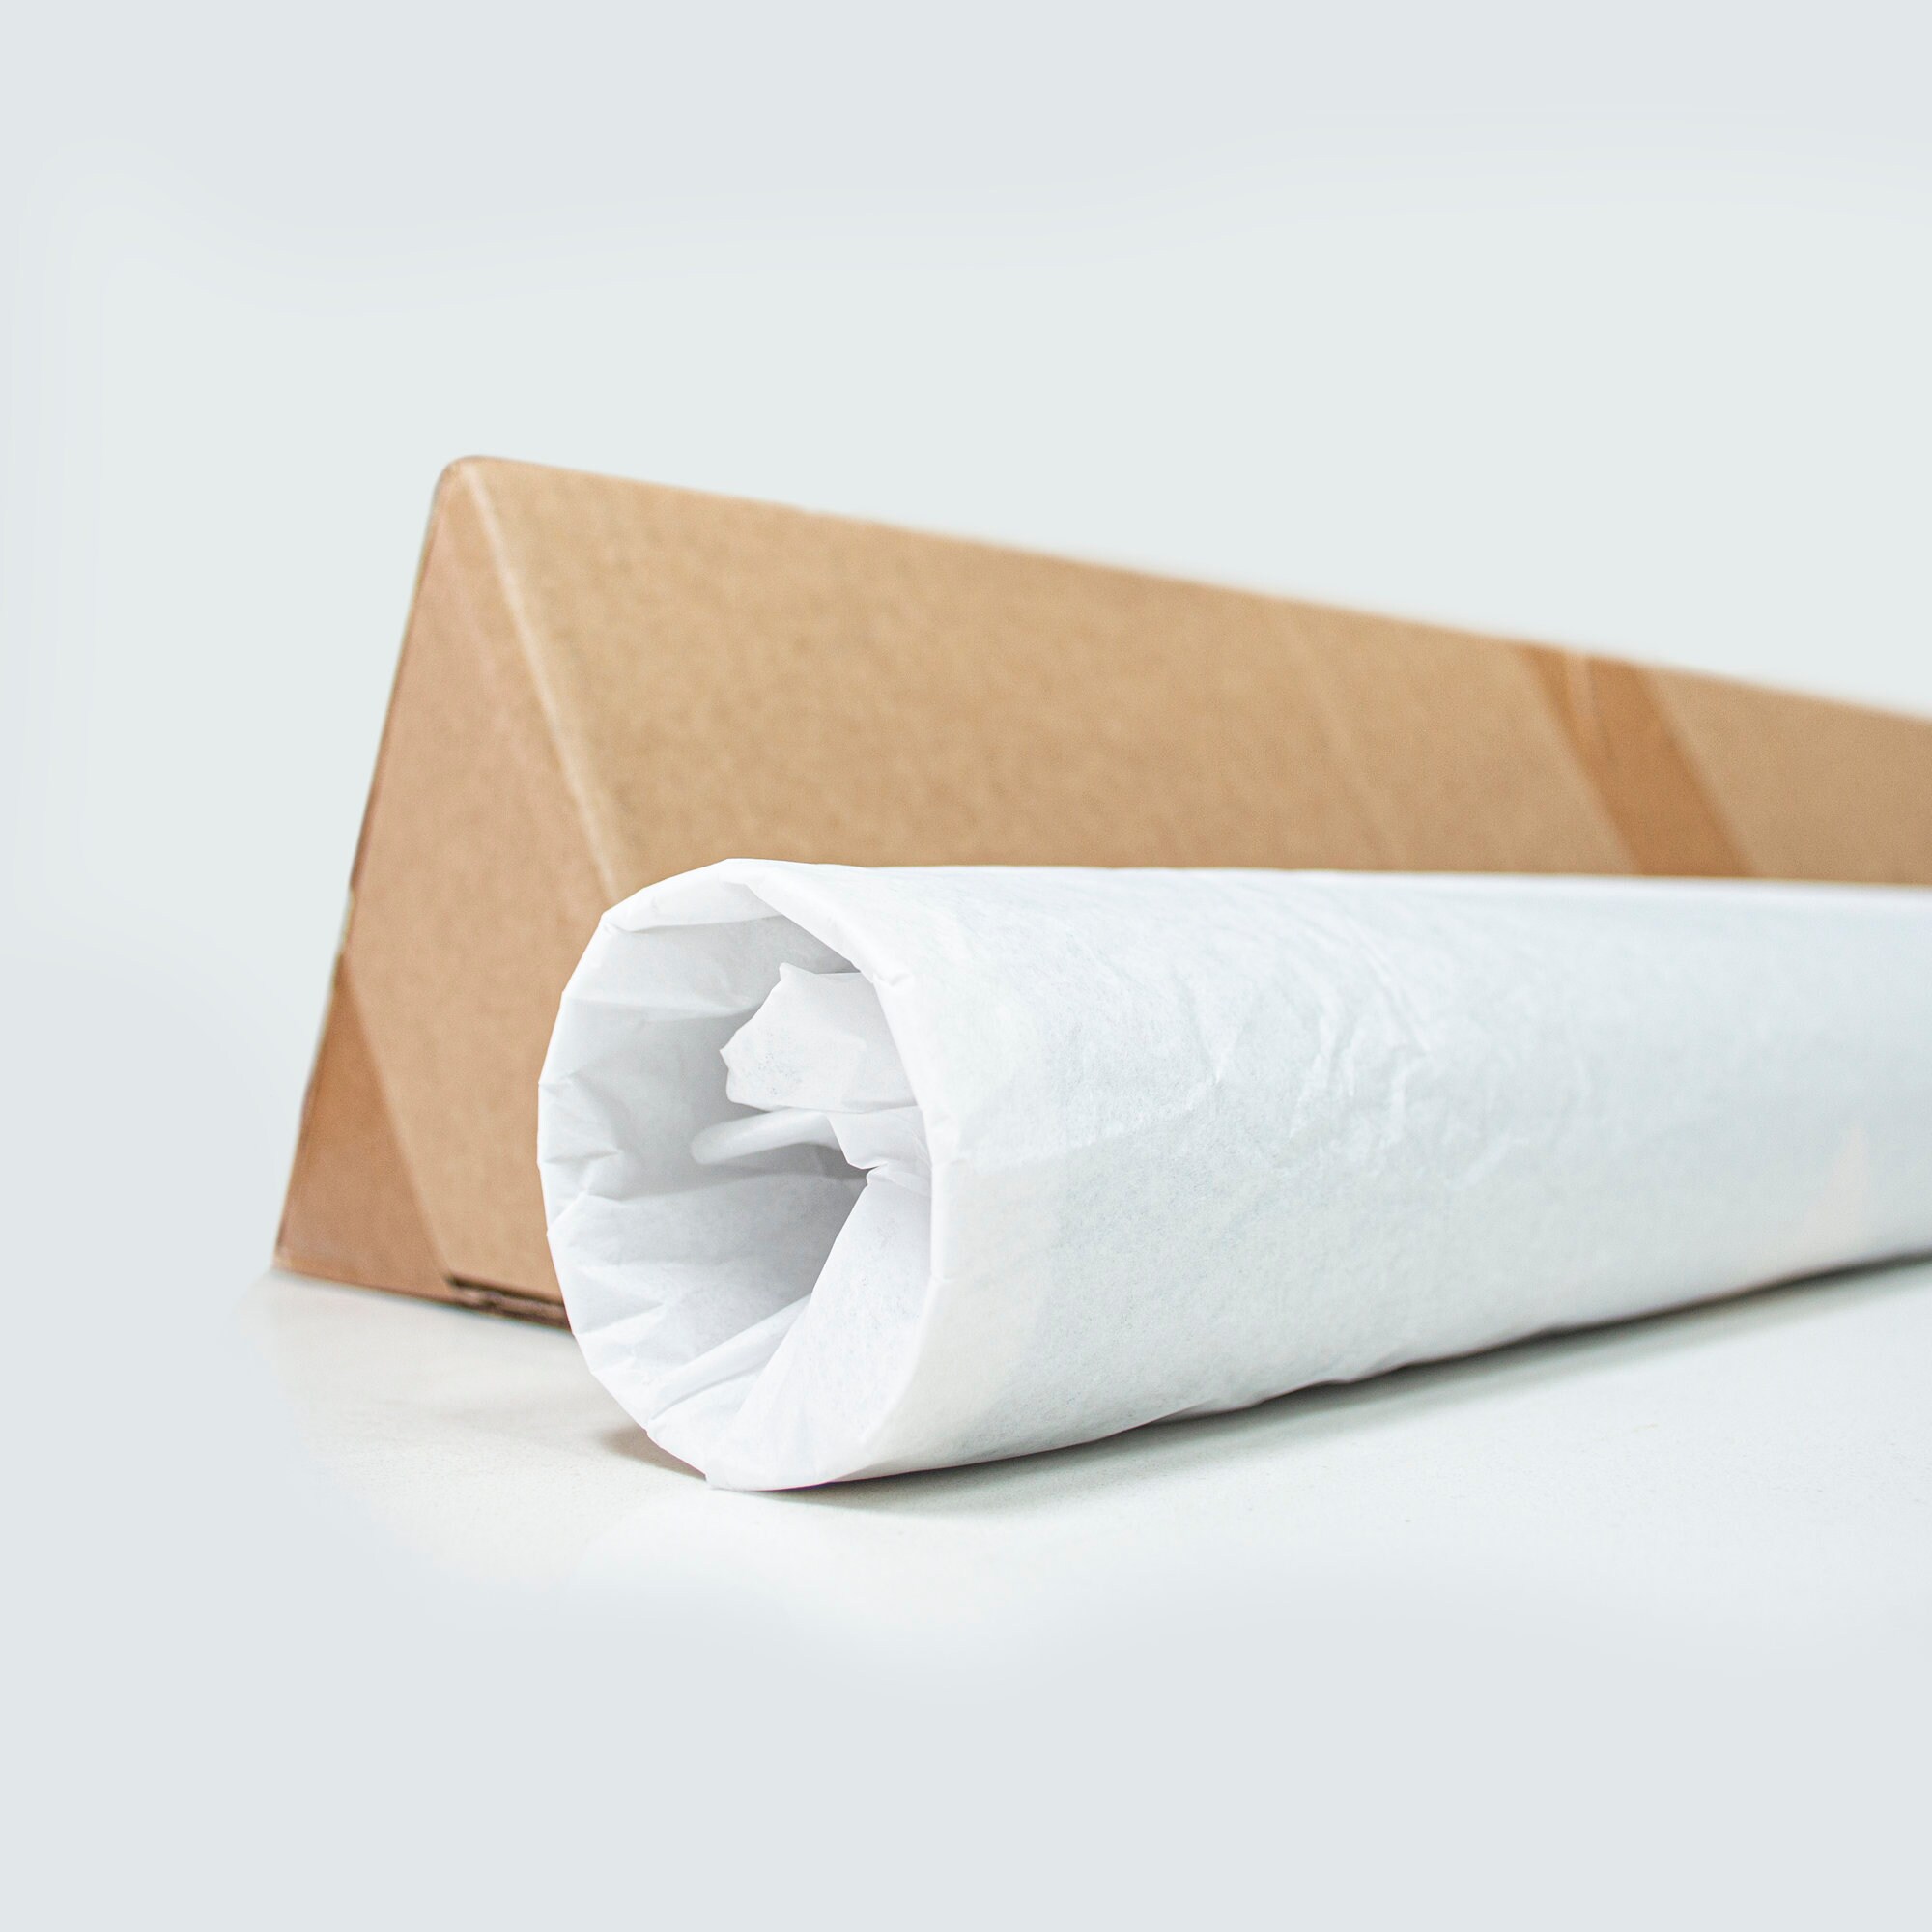 Acid Free Tissue Paper, Airport Self Storage